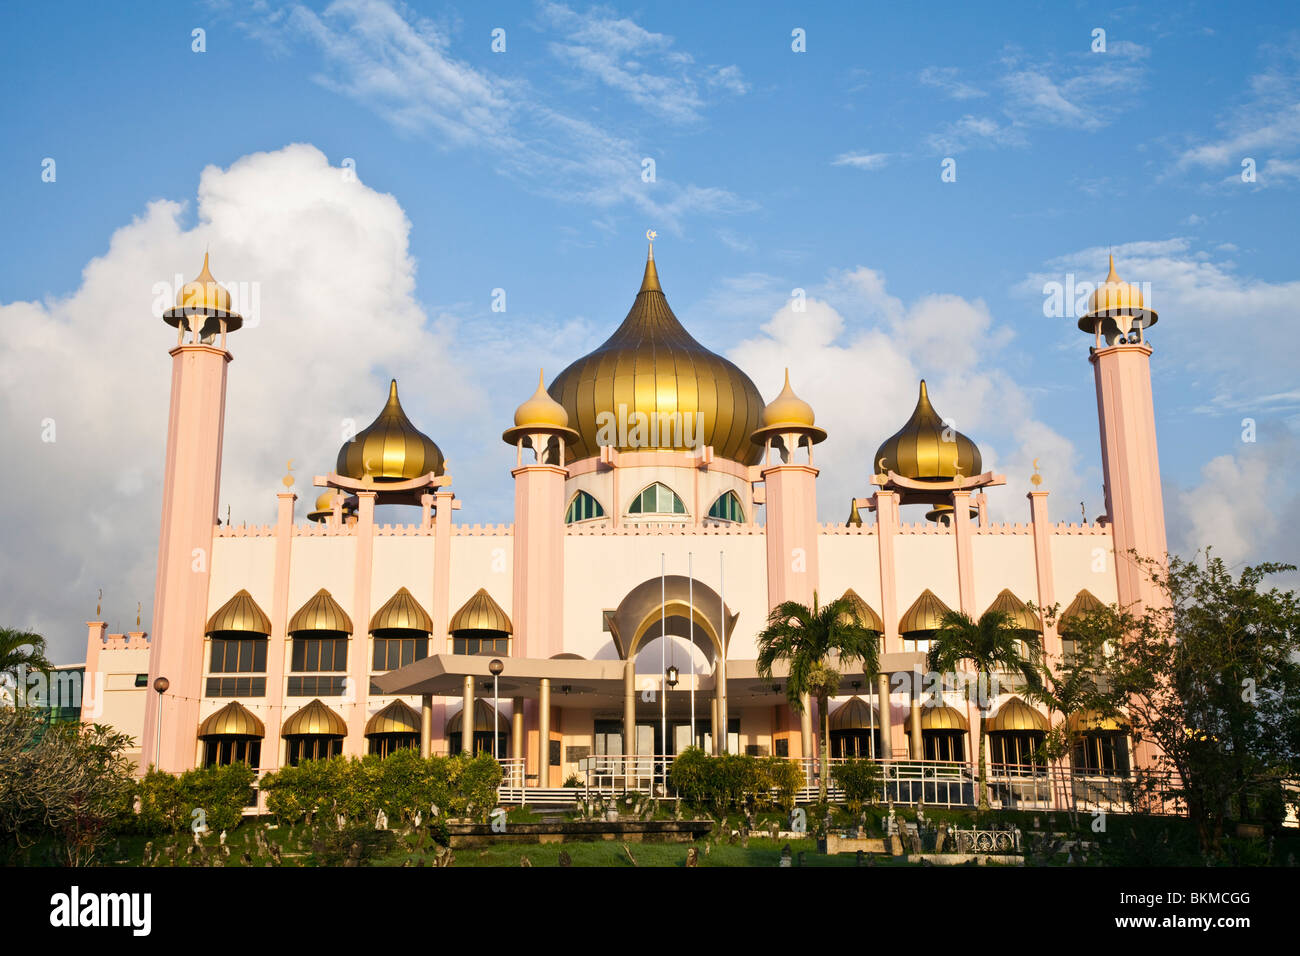 The old Sarawak State Mosque also known as the Kuching Mosque. Kuching, Sarawak, Borneo, Malaysia. Stock Photo